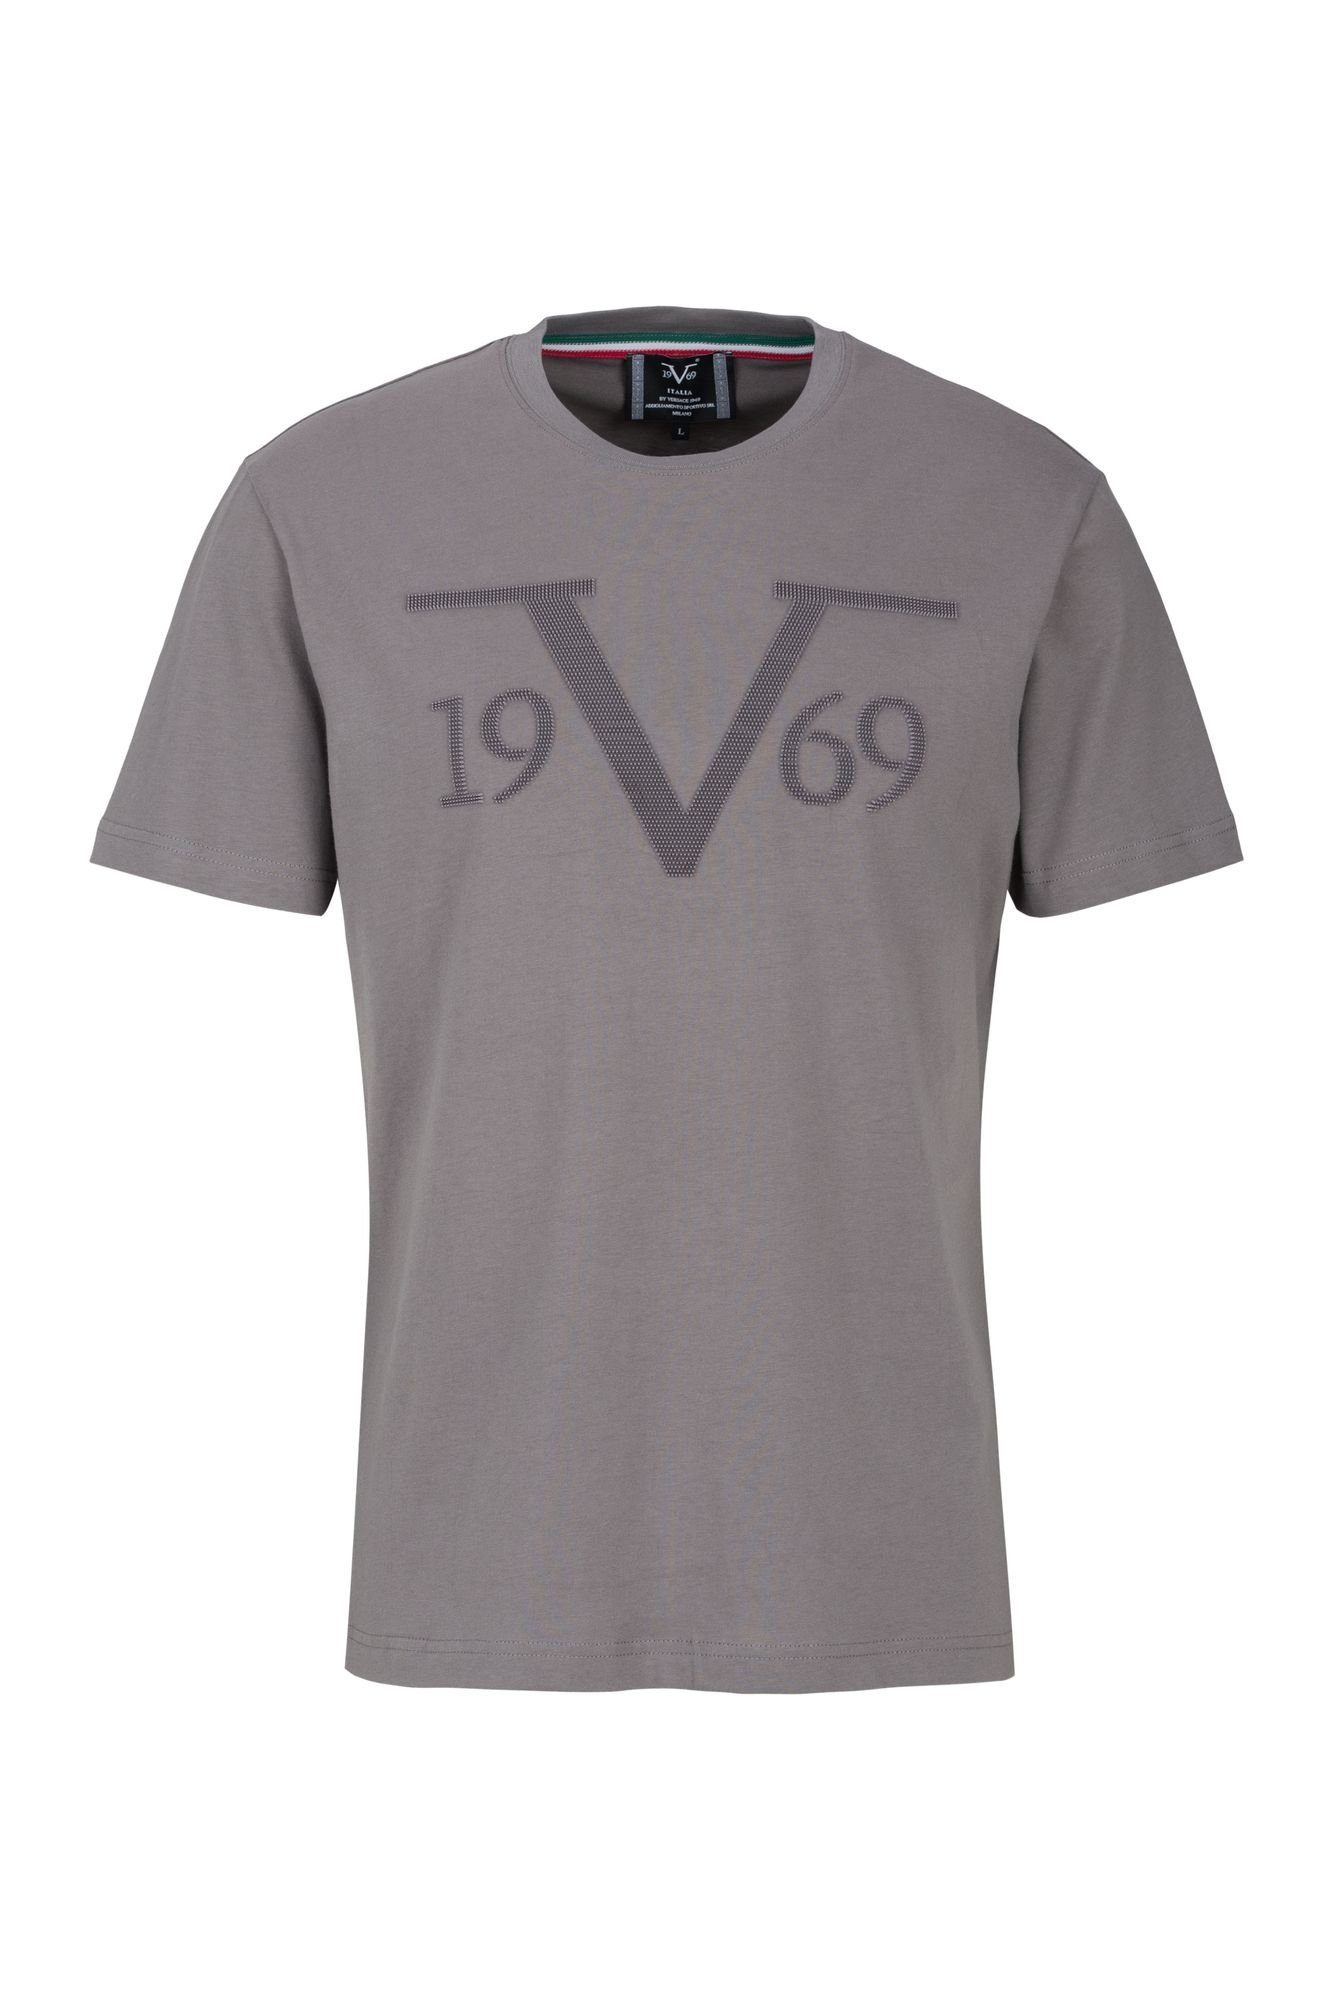 19V69 Italia by Versace Rundhalsshirt by Versace Sportivo SRL - Stefano